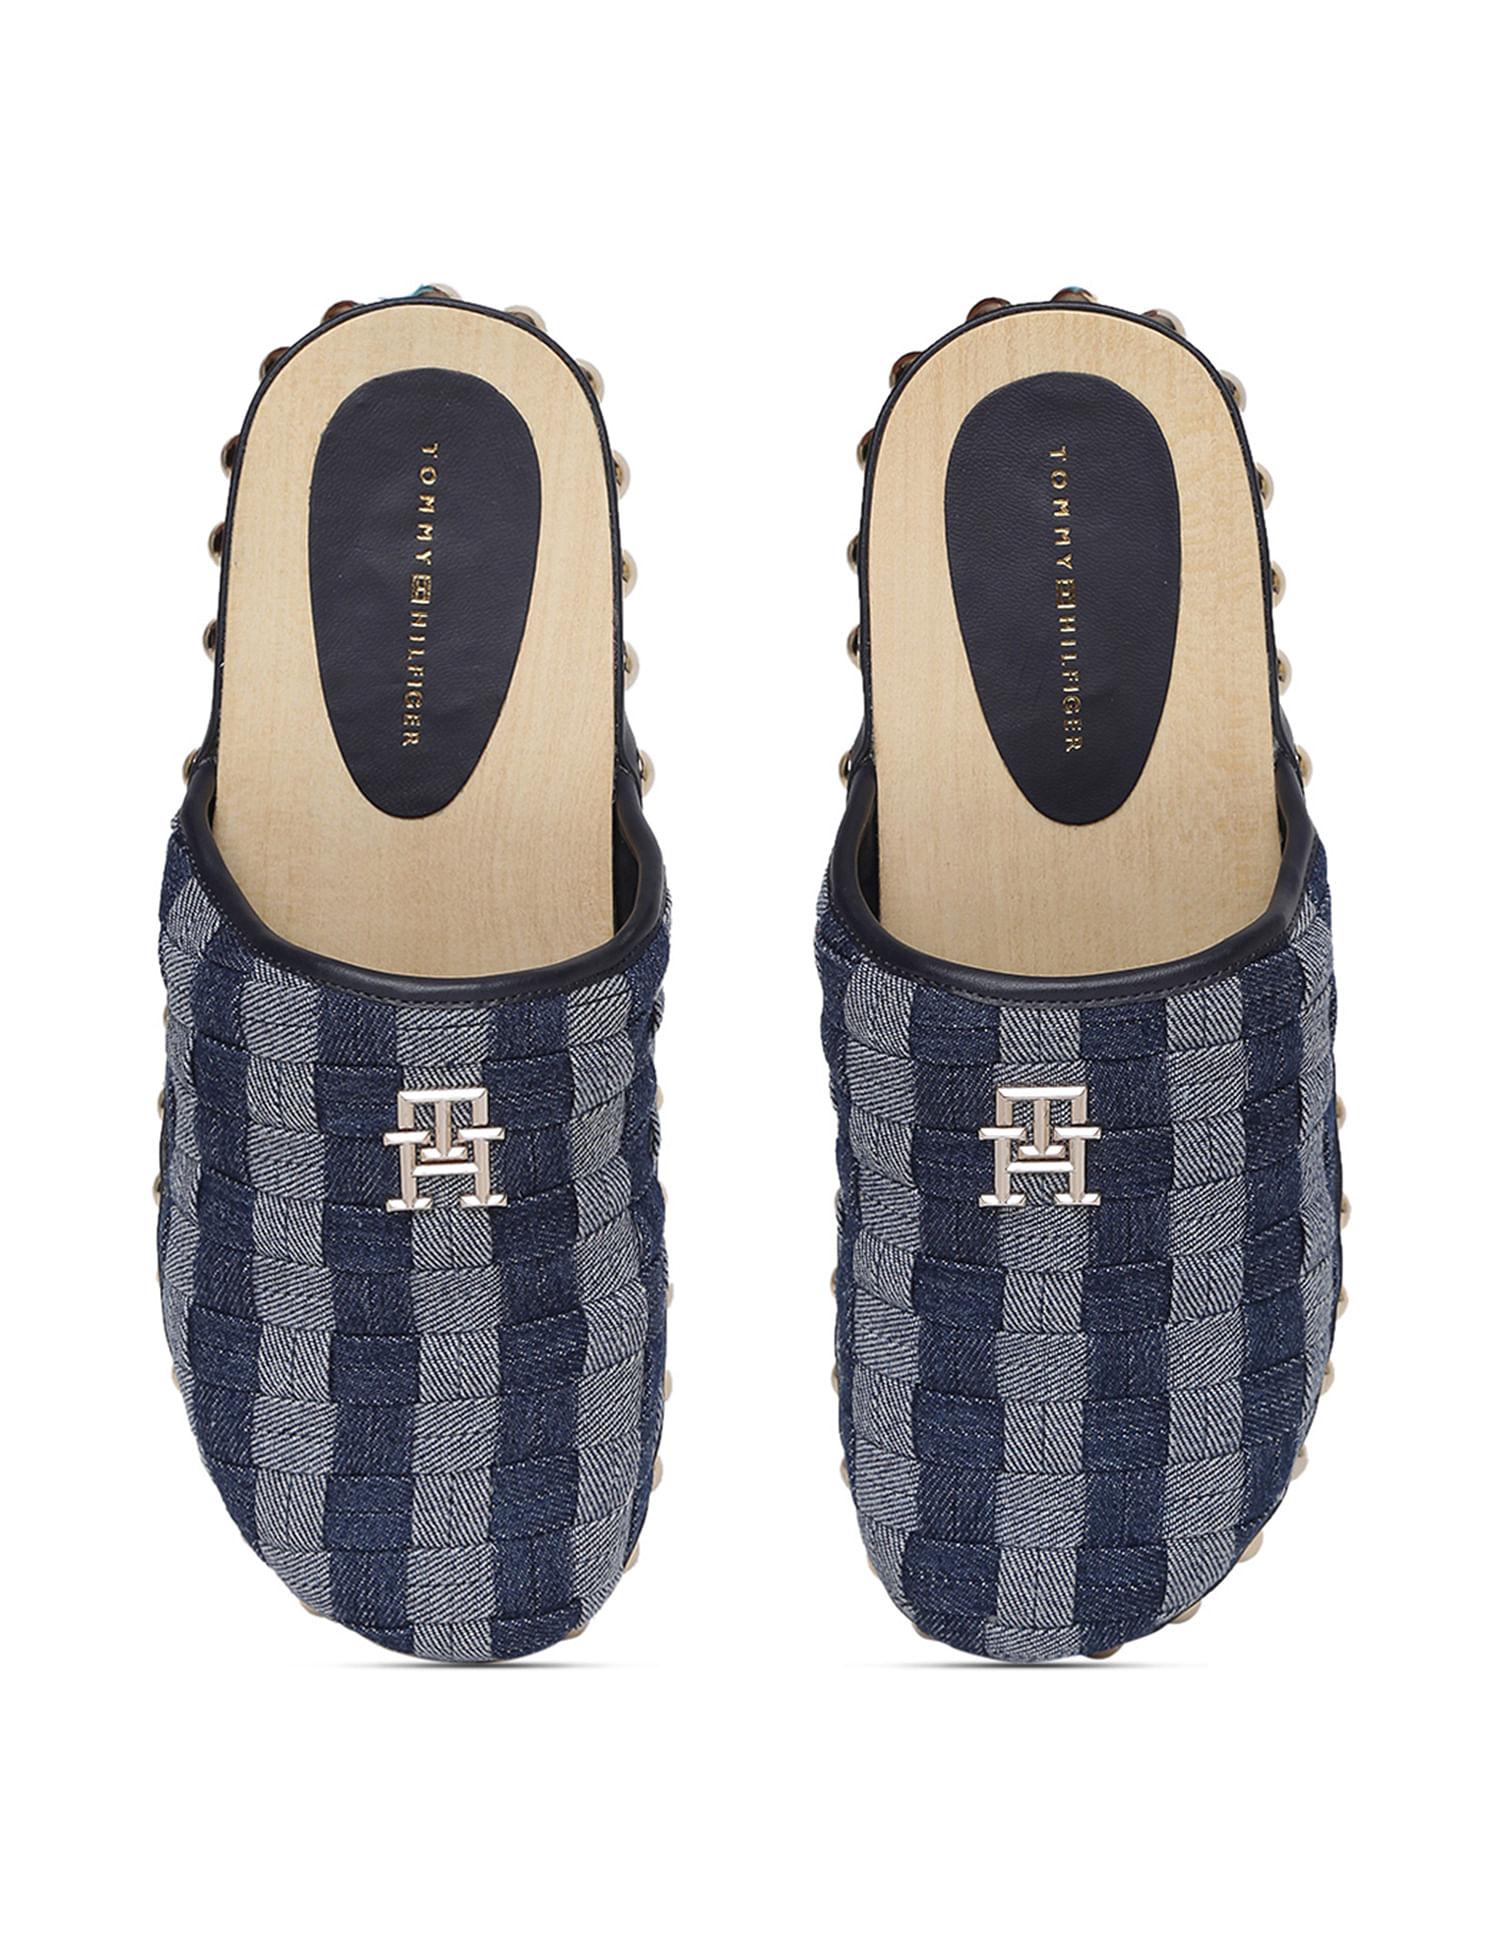 Buy Catwalk Blue Denim Sandals for Women's at Amazon.in